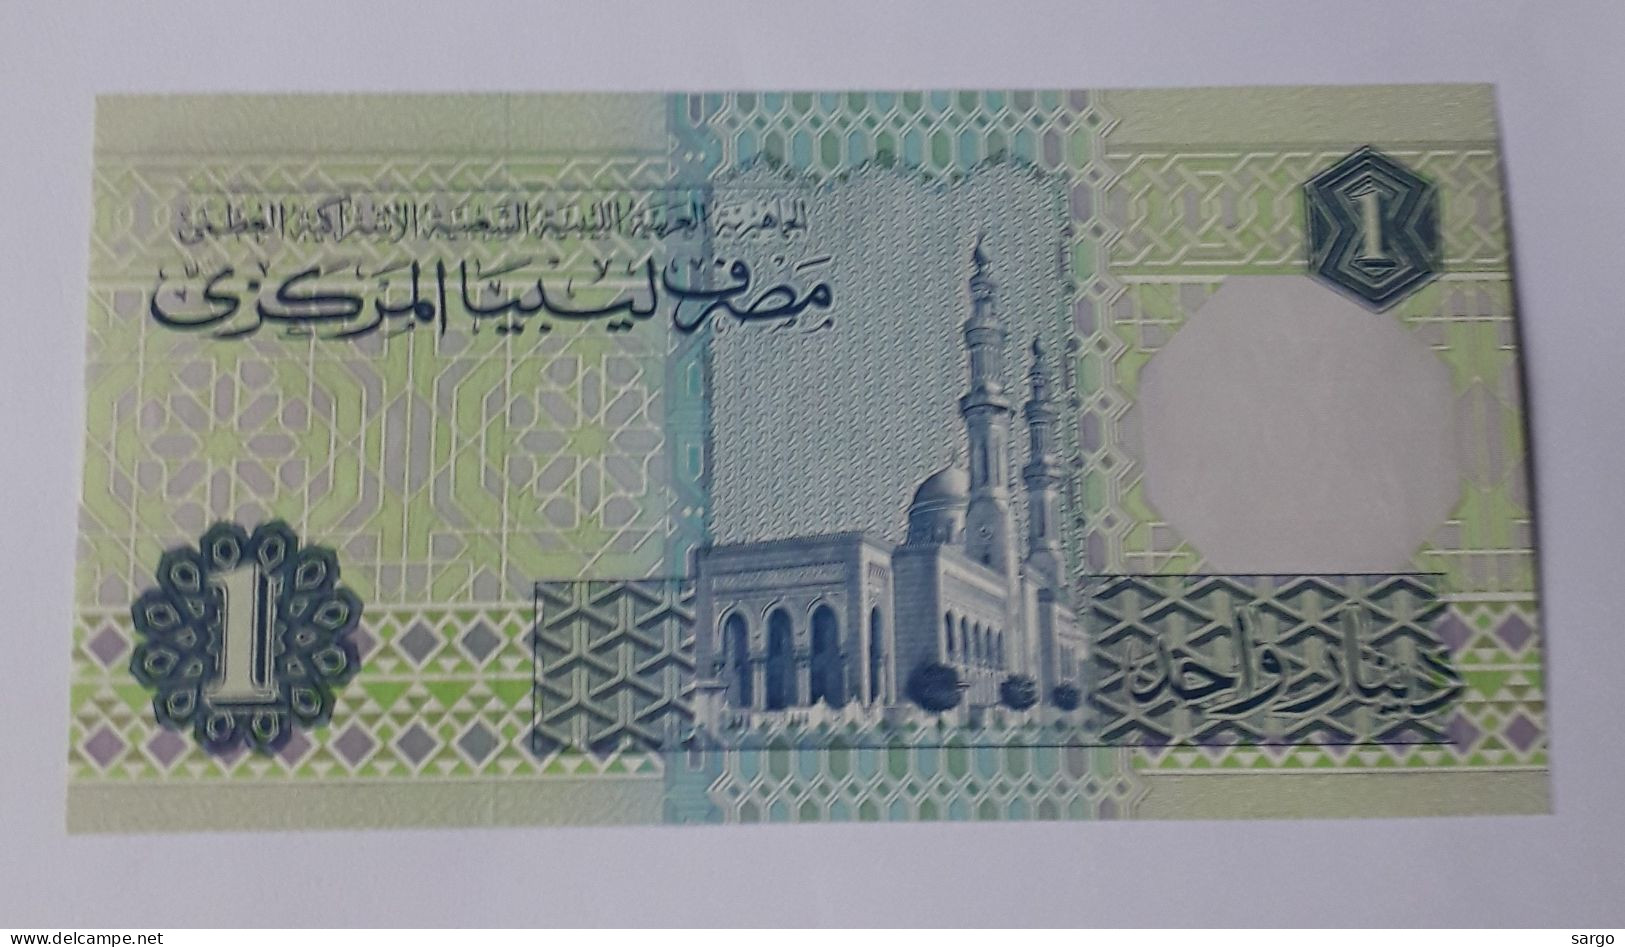 LIBYA - 1 DINAR - 1991 -  P 59b  - UNC - BANKNOTES - PAPER MONEY - CARTAMONETA - - Libia